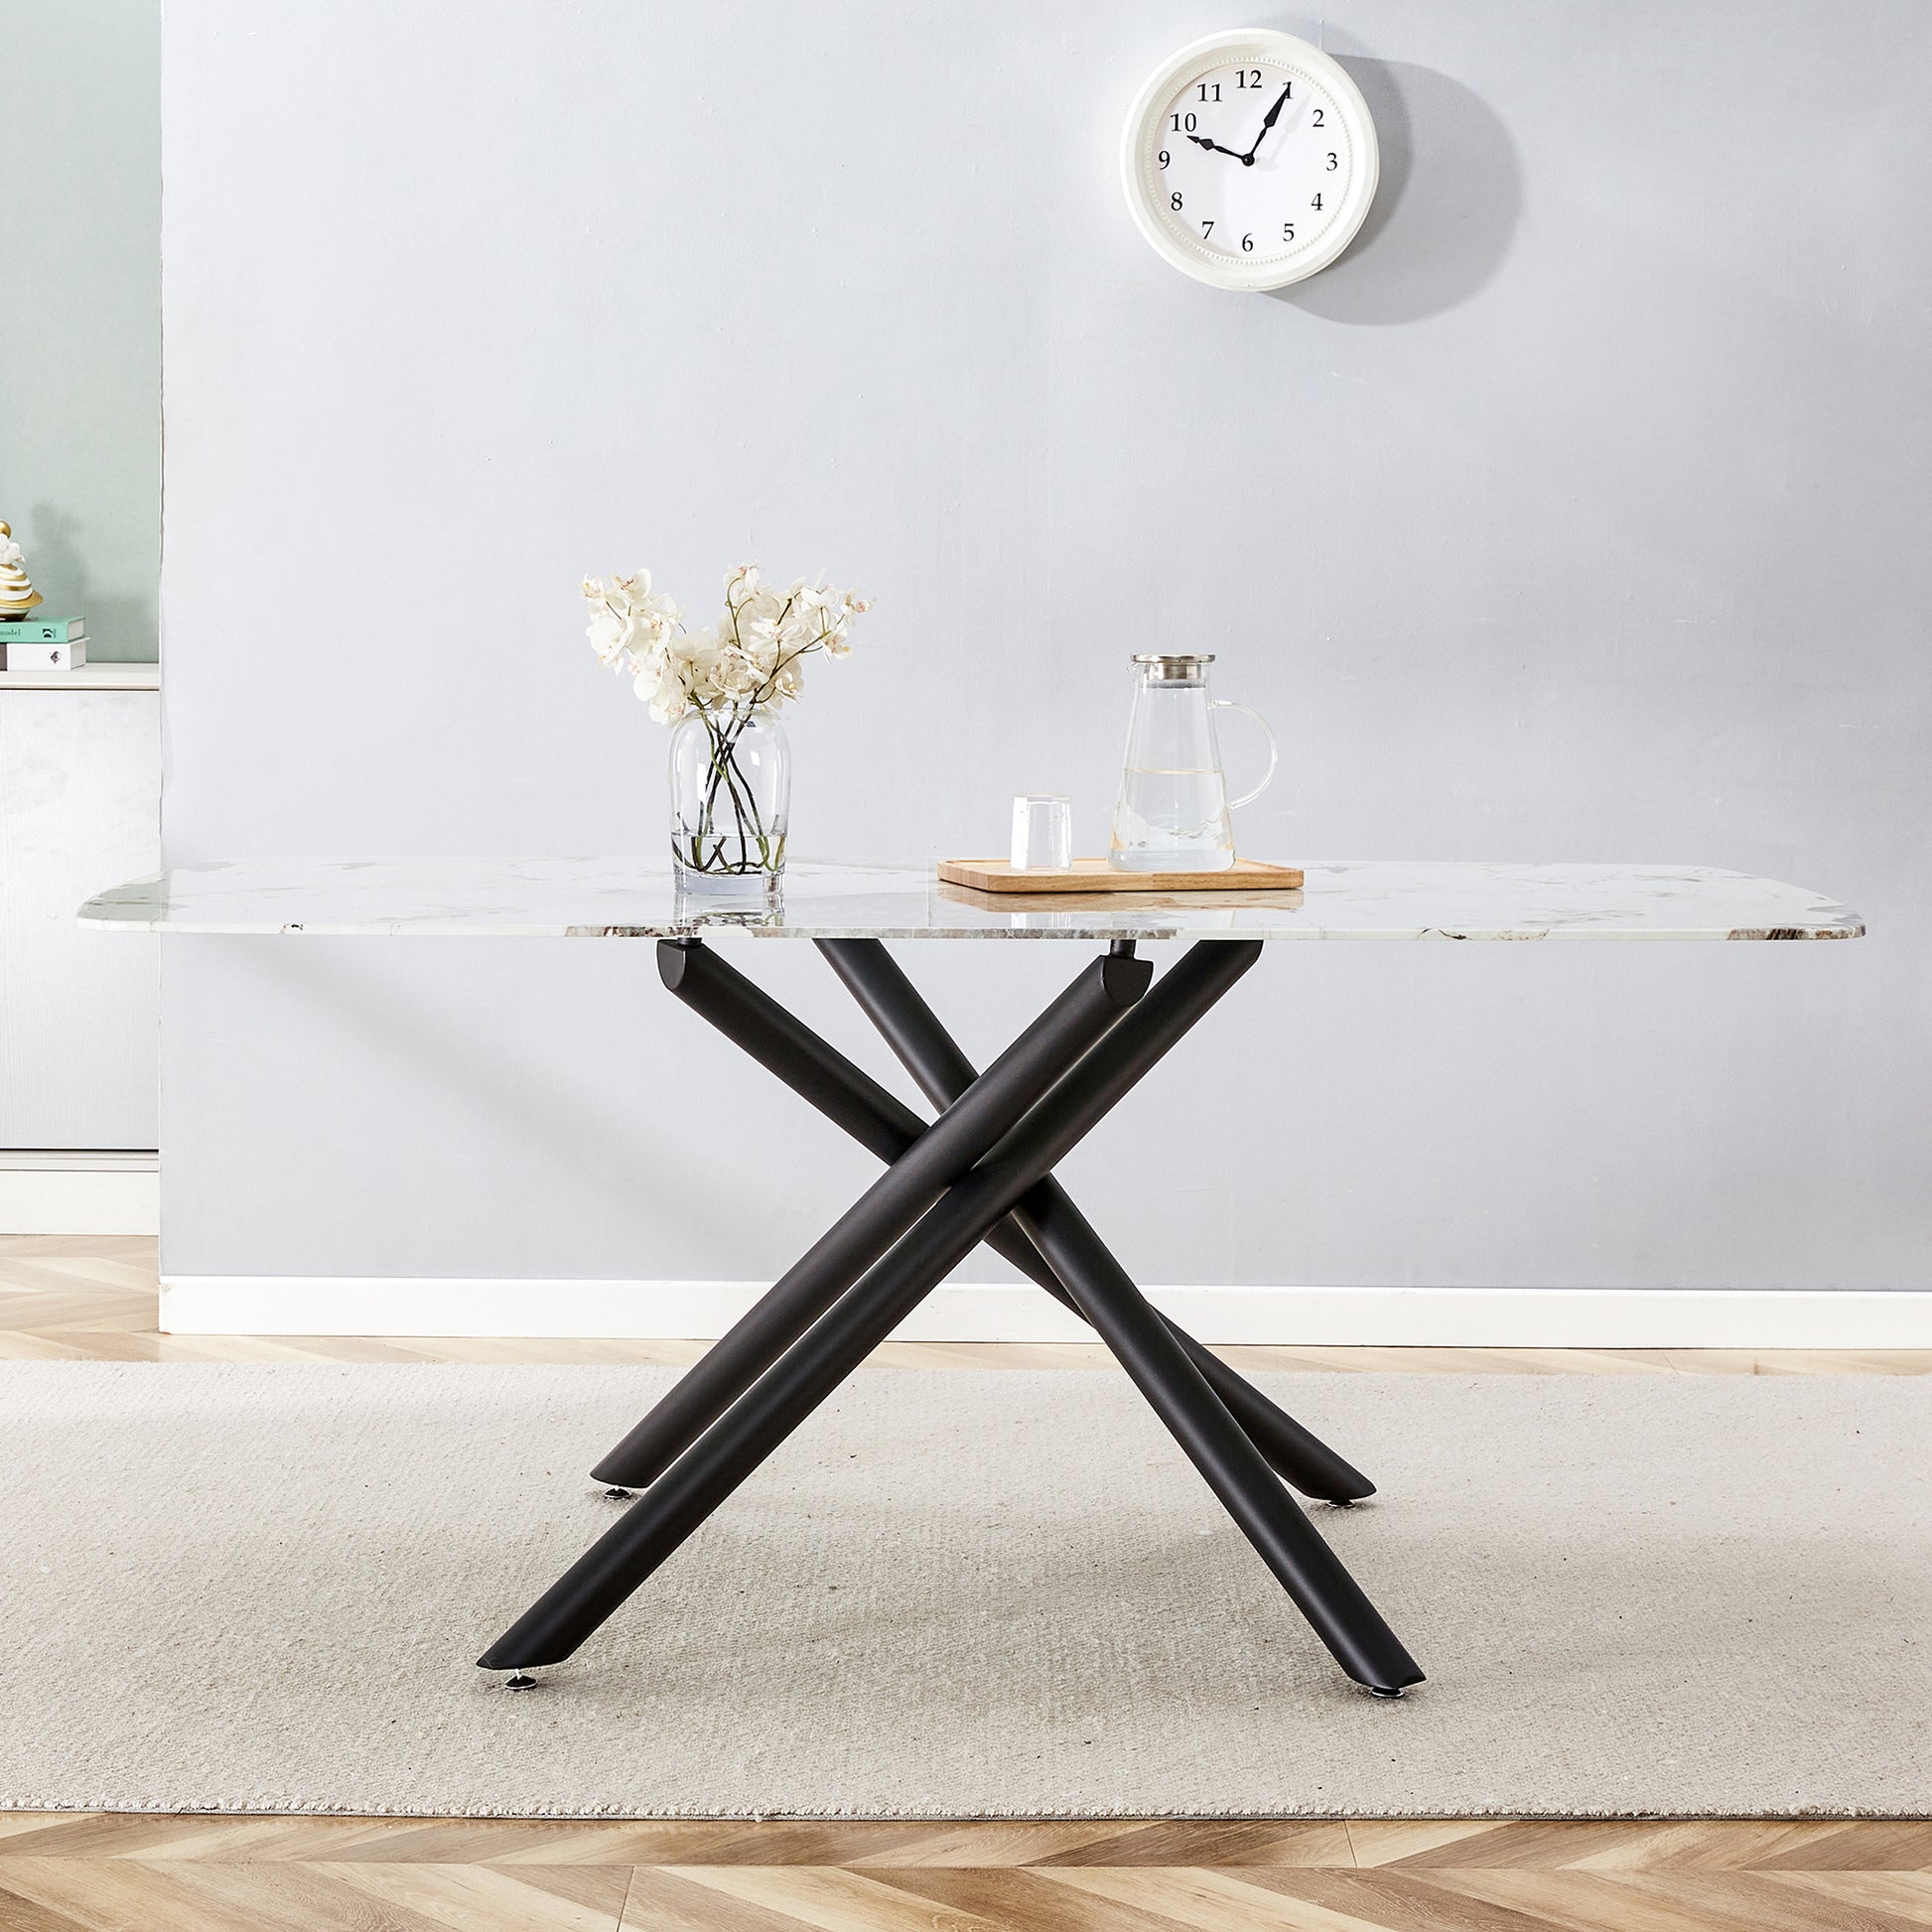 Large rectangular imitation marble dining table, 6 8 white+black-glass